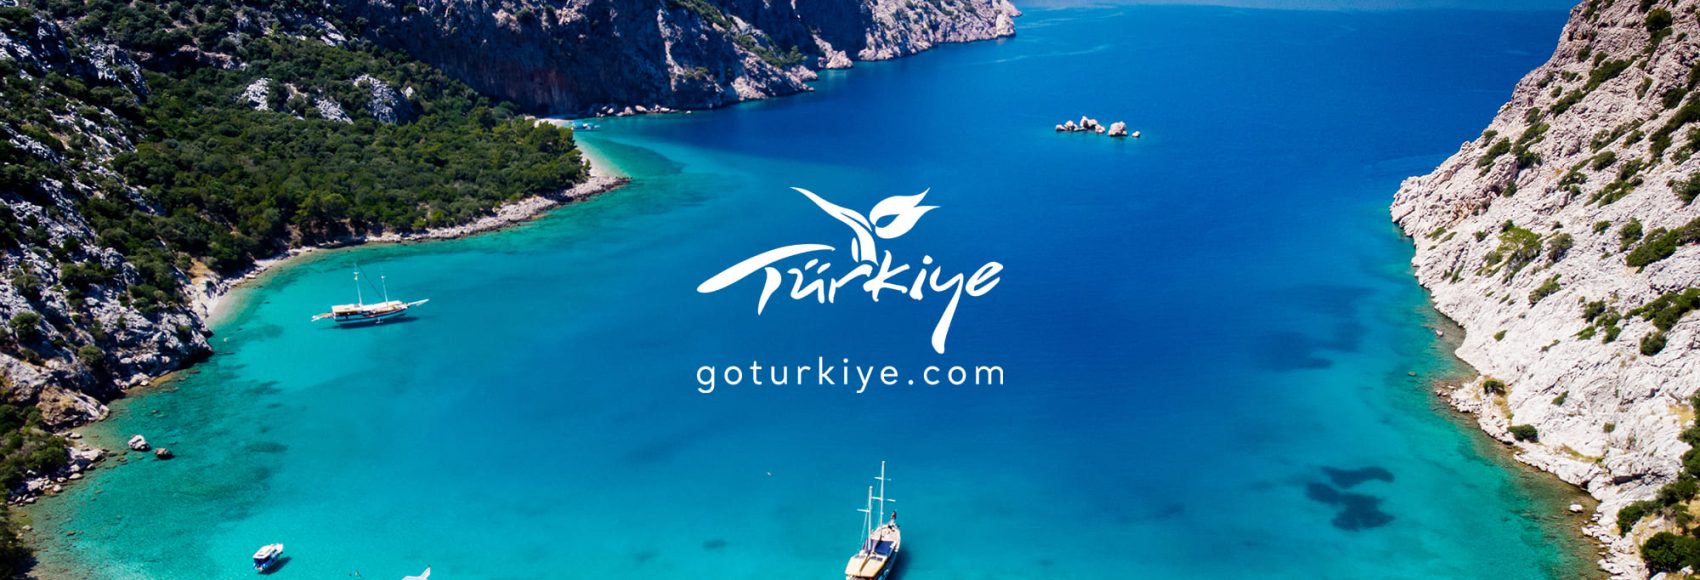 GO Turkiye Web Banner TT